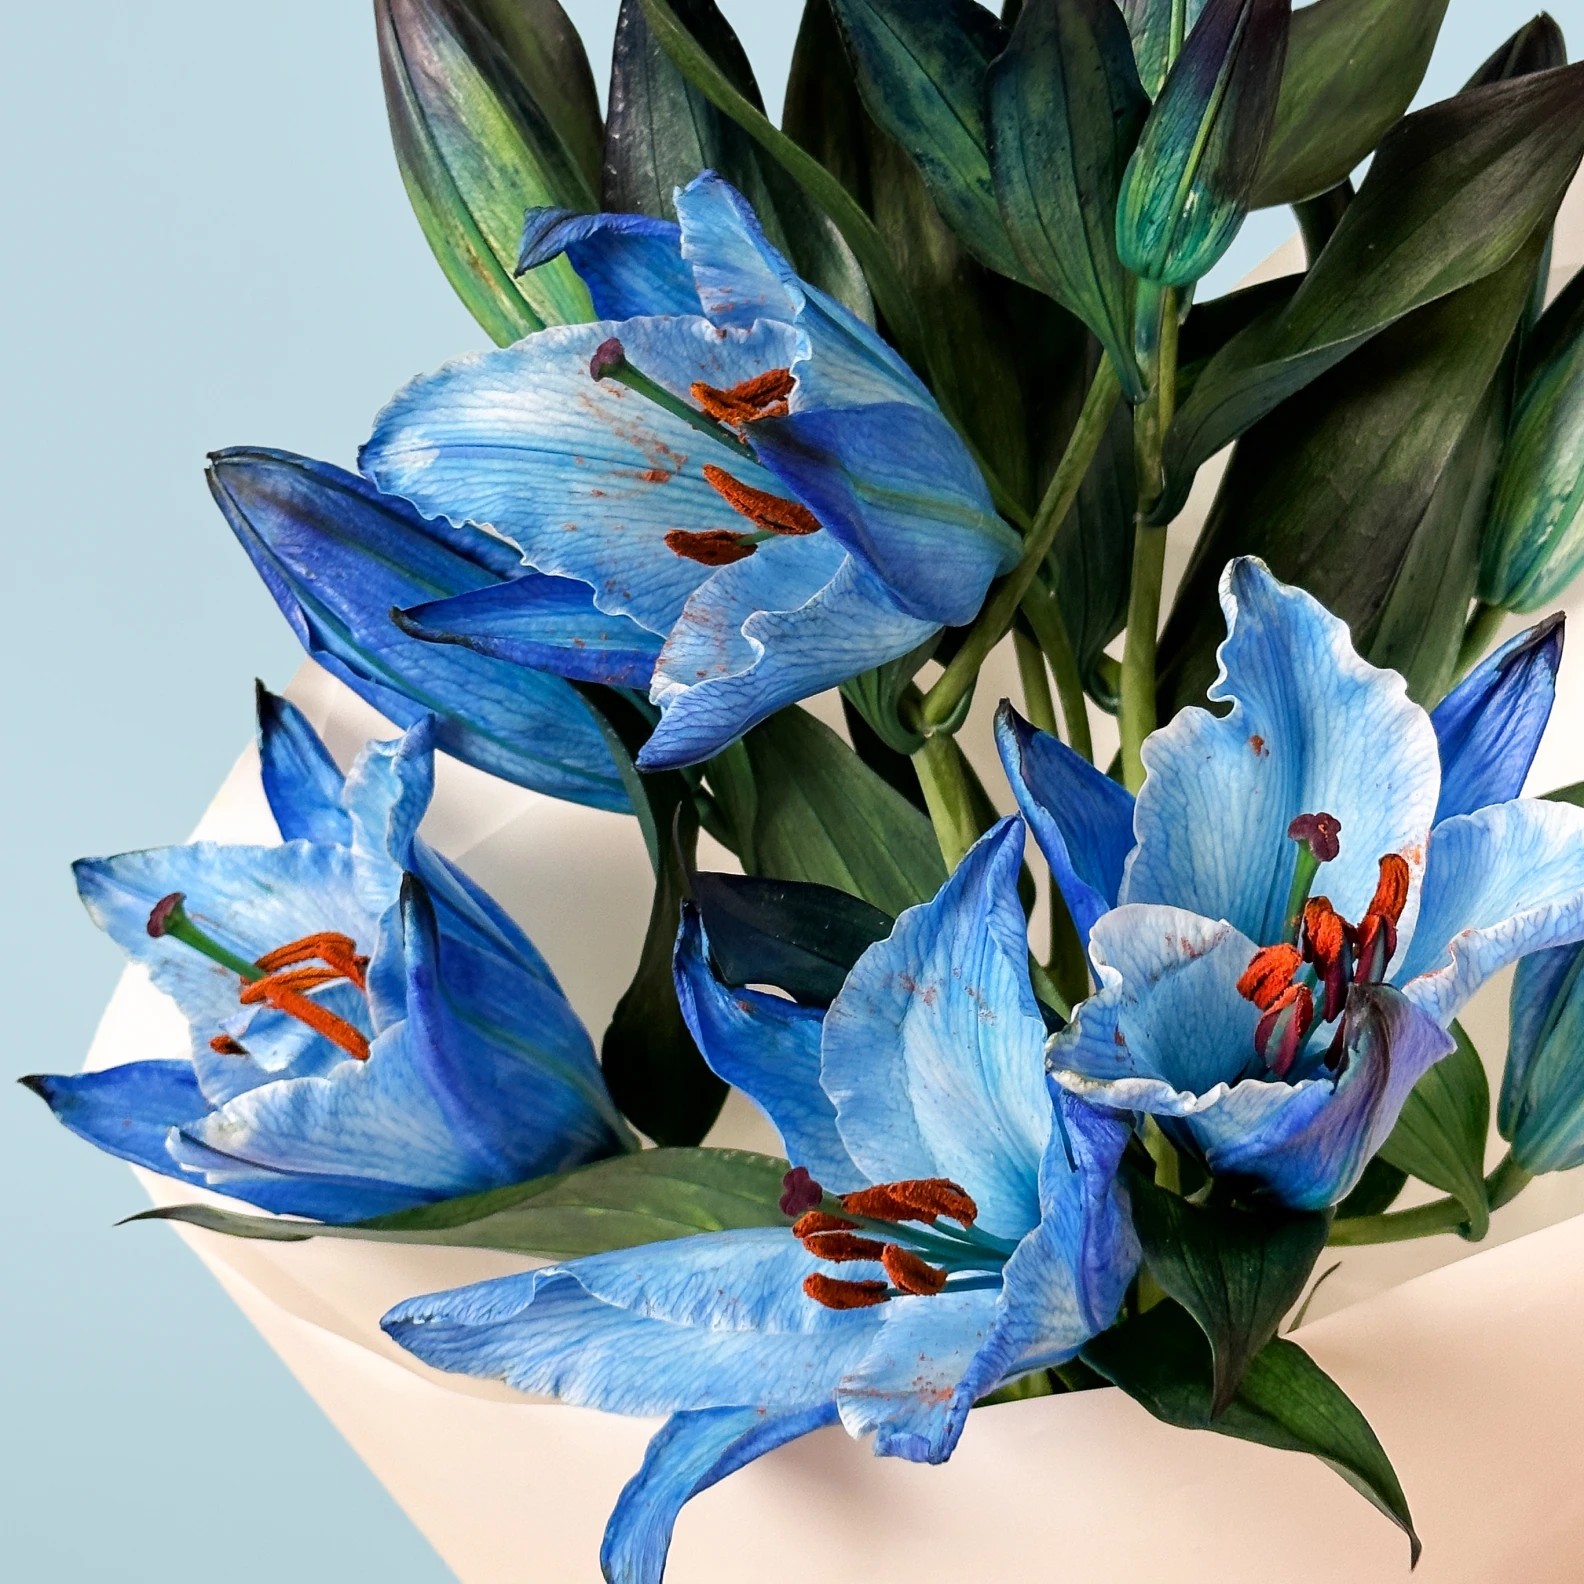 3 Blue Lilies - image №3